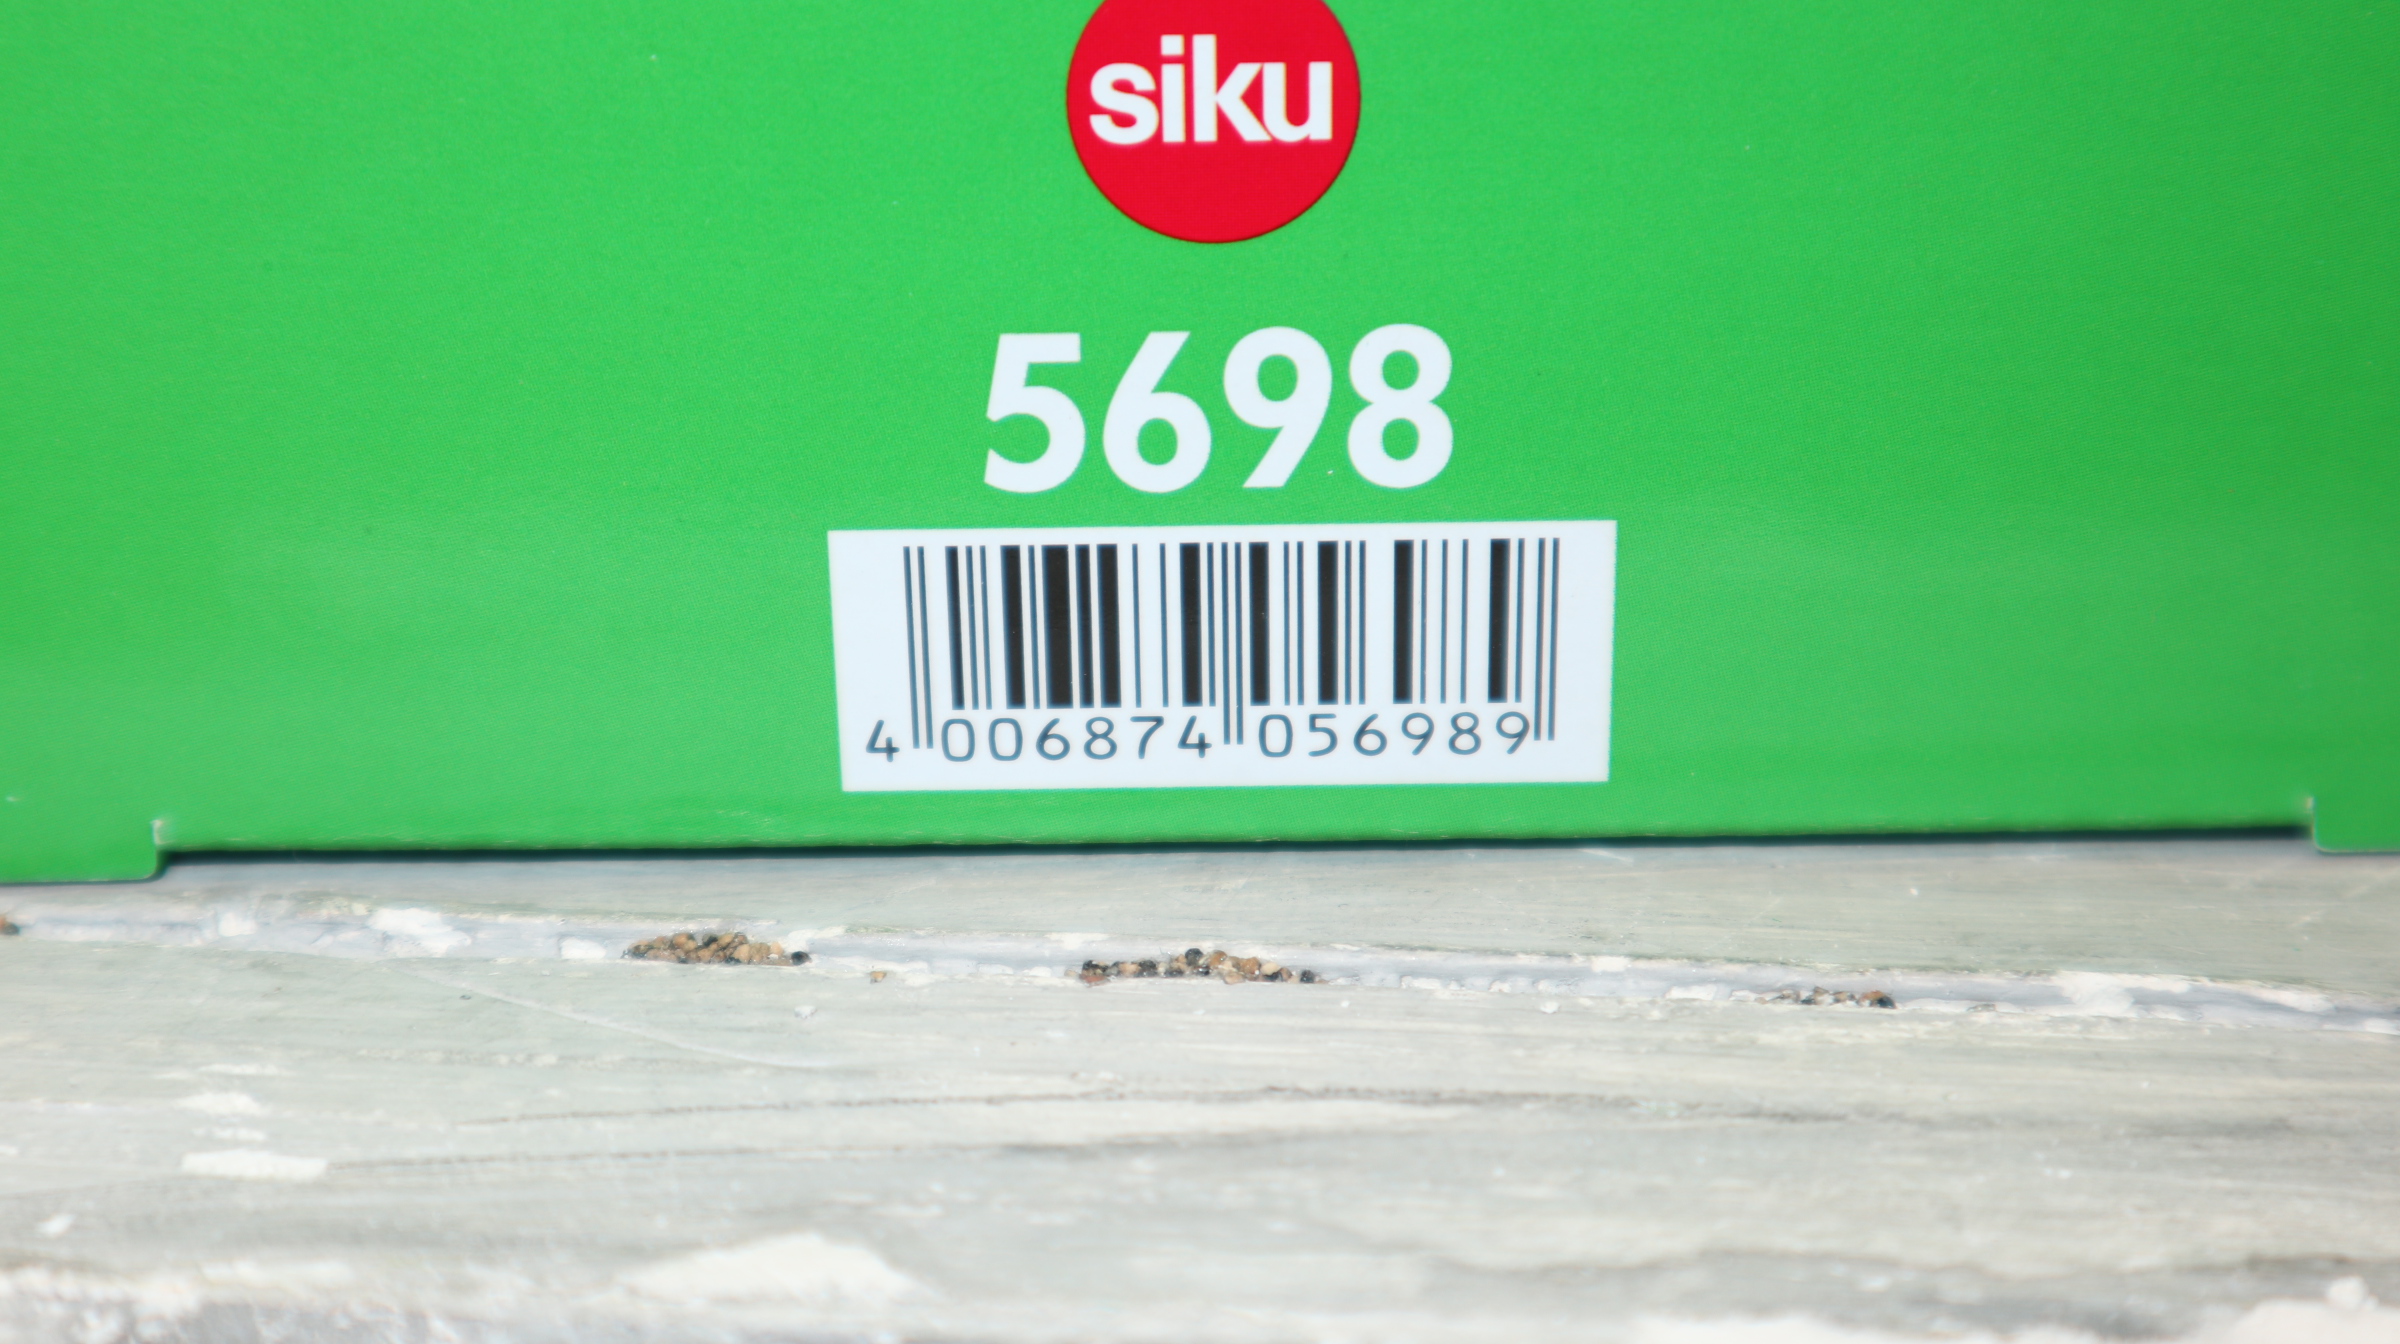 Siku 5698 in 1:50 / 1:32, Siloplane mit Reifen, NEU in OVP